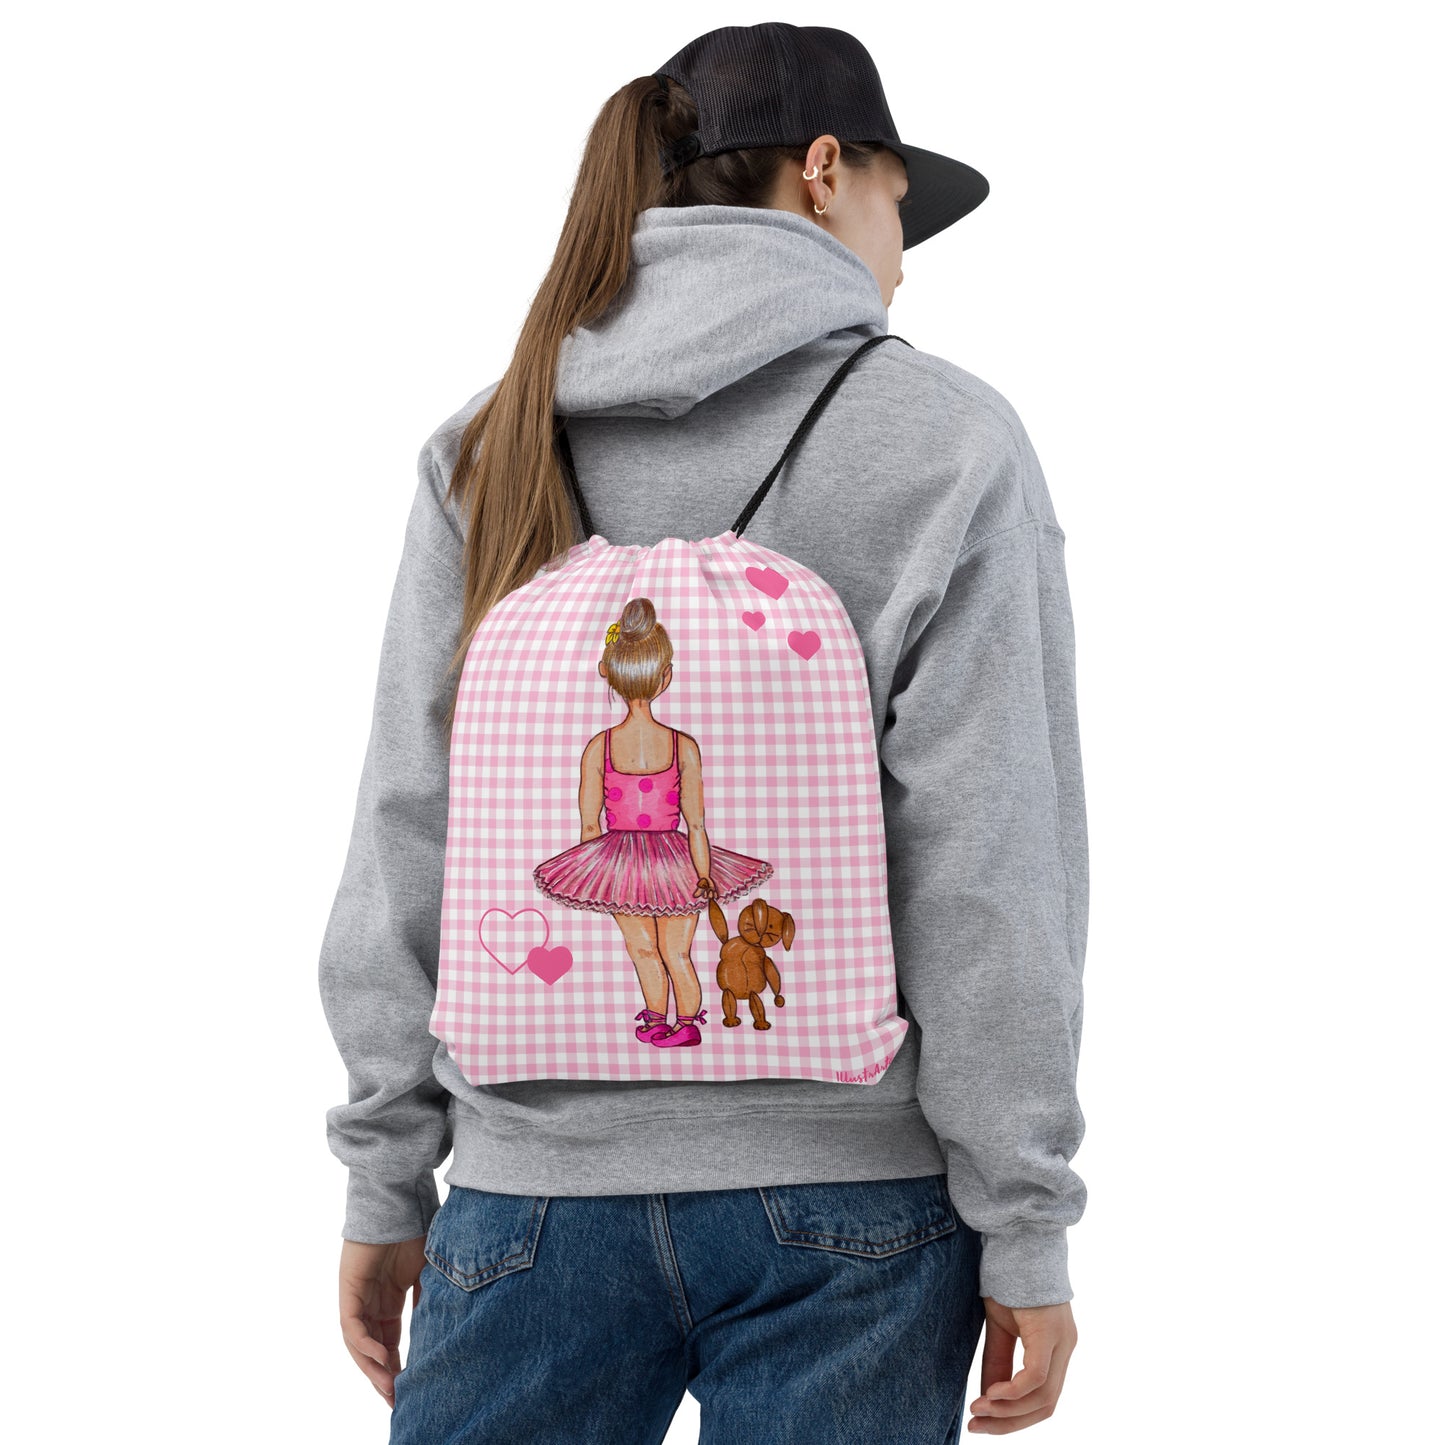 Ballerina Girl Gym Bag, pink outfit with a teddy bear on a pink polka dot design. - IllustrArte